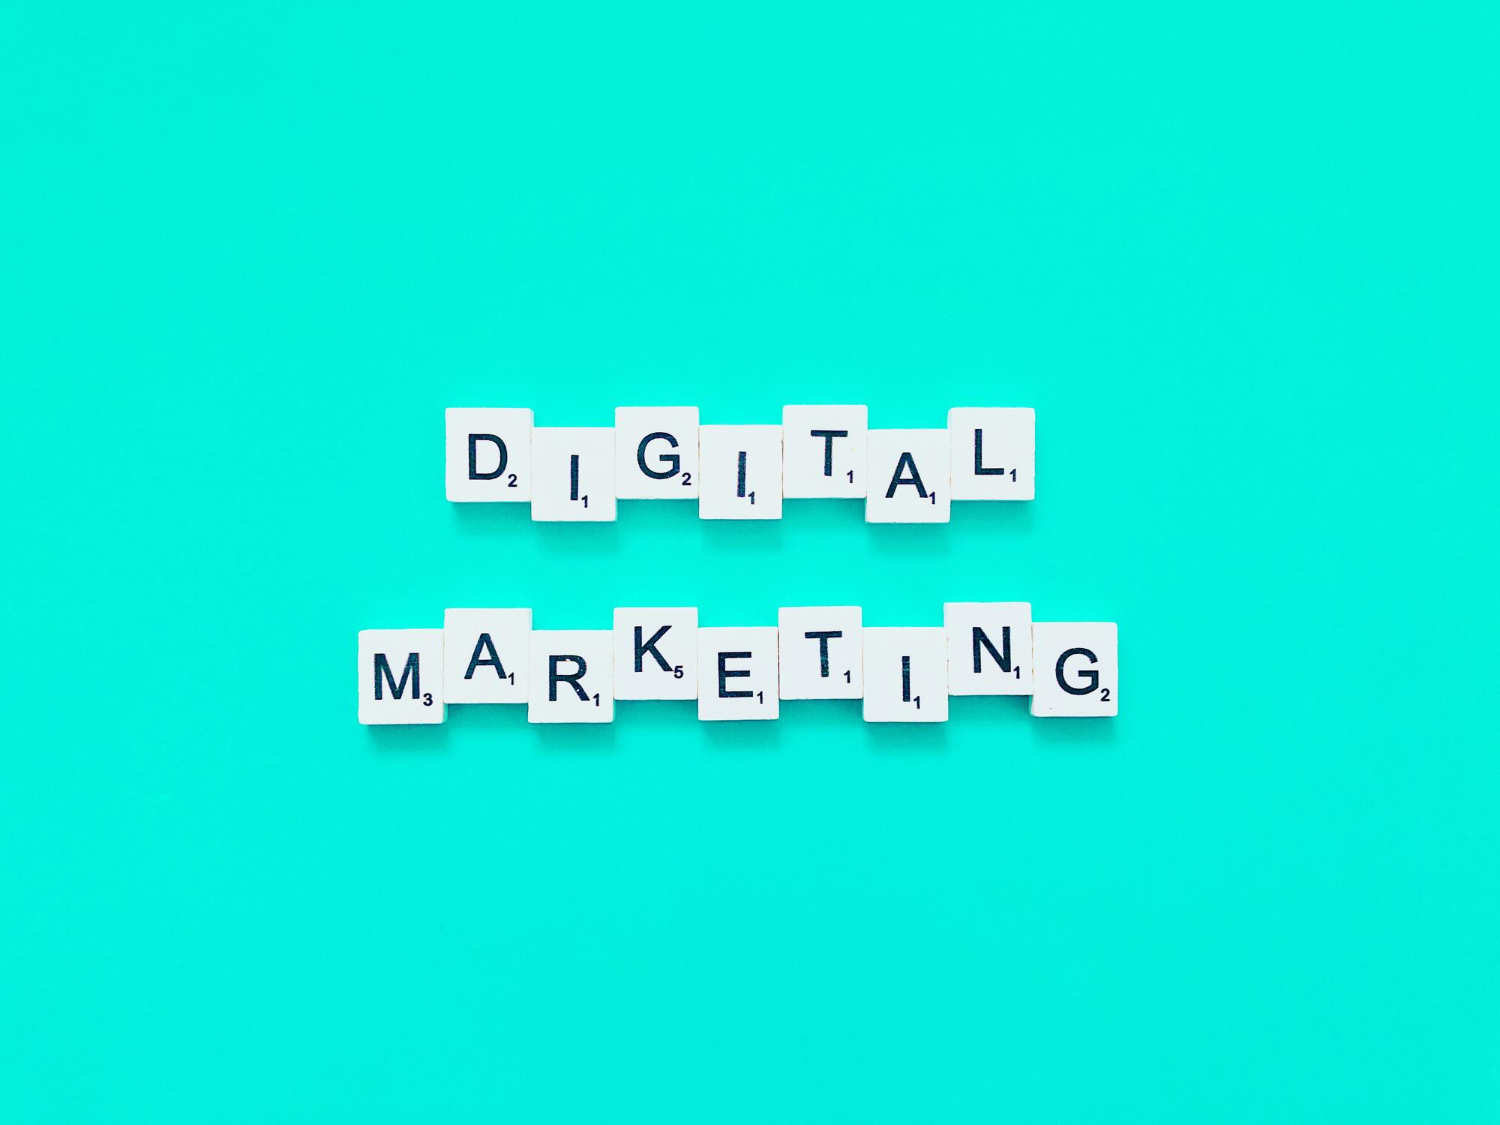 Digital marketing